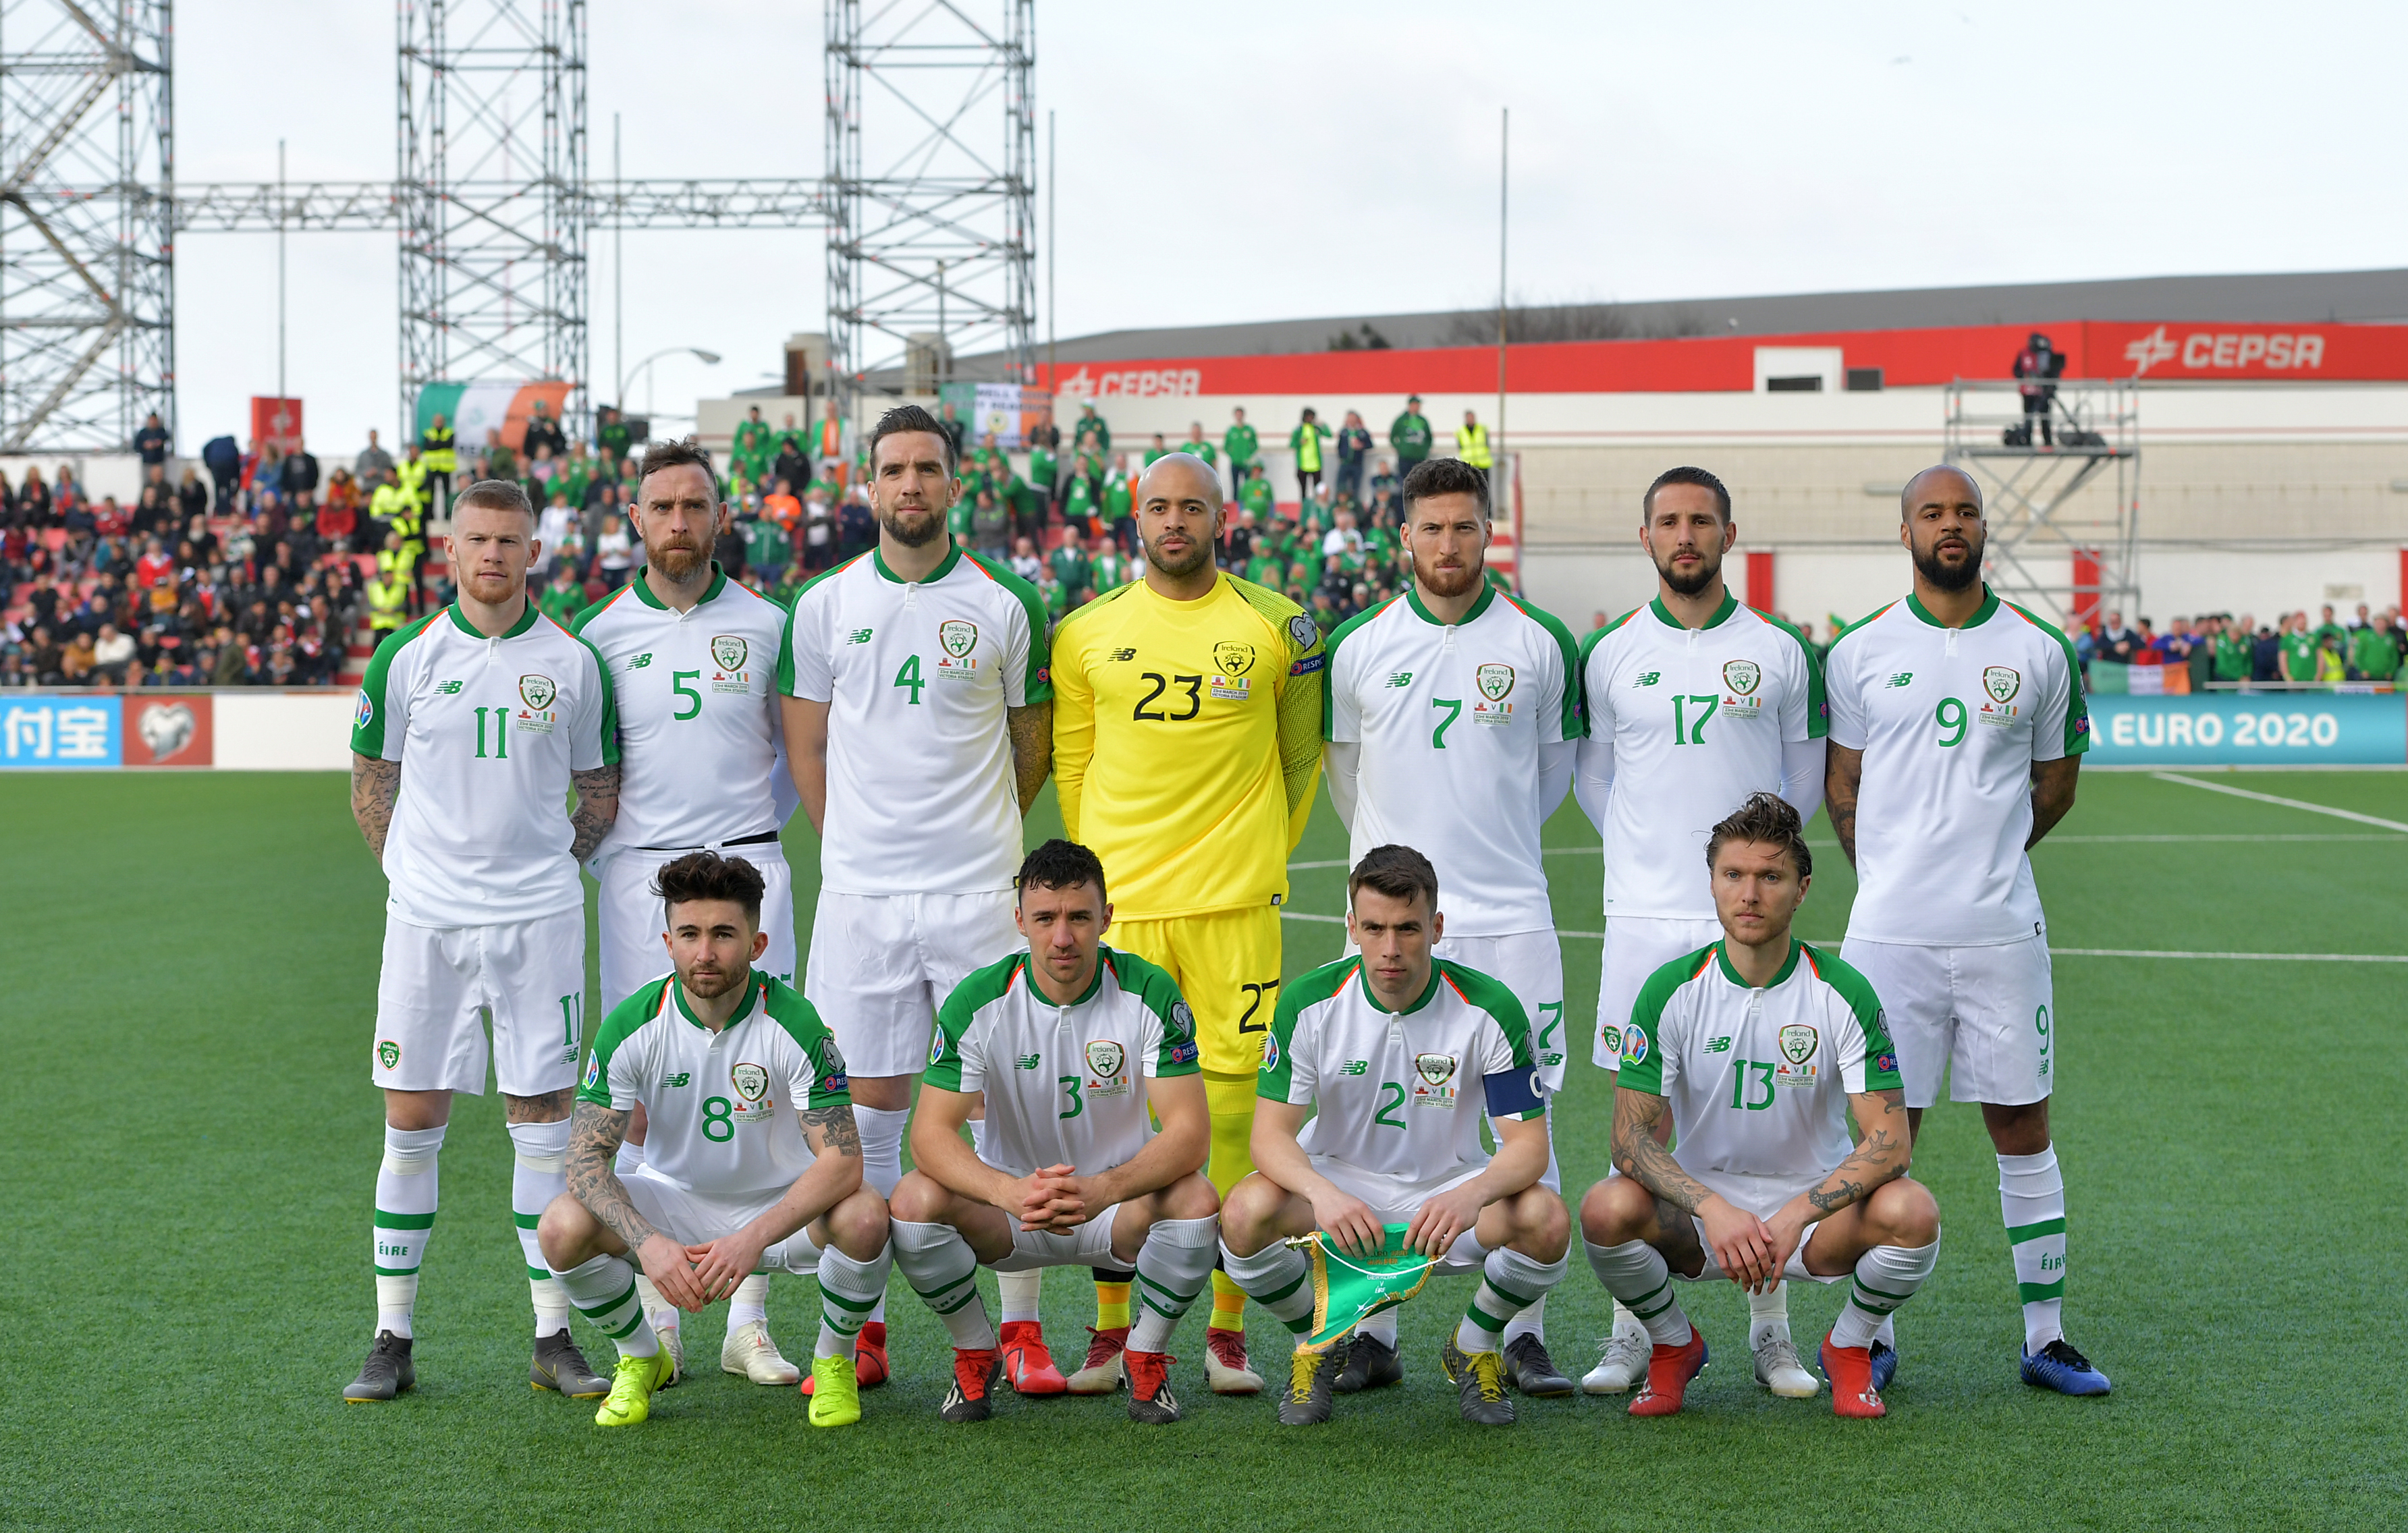 The Republic of Ireland team group